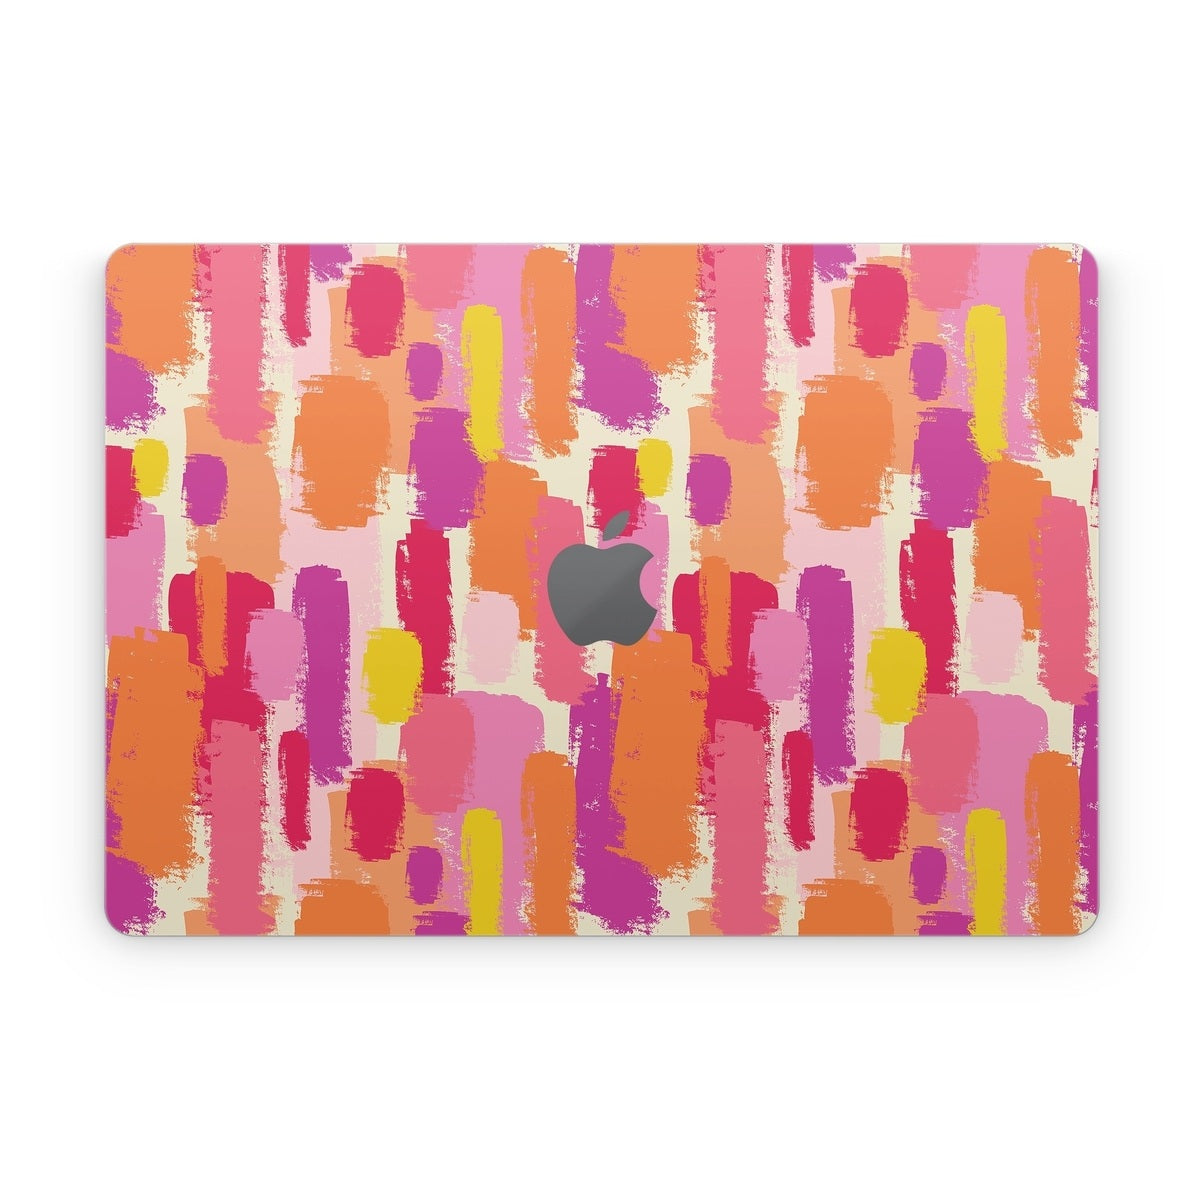 Chroma - Apple MacBook Skin